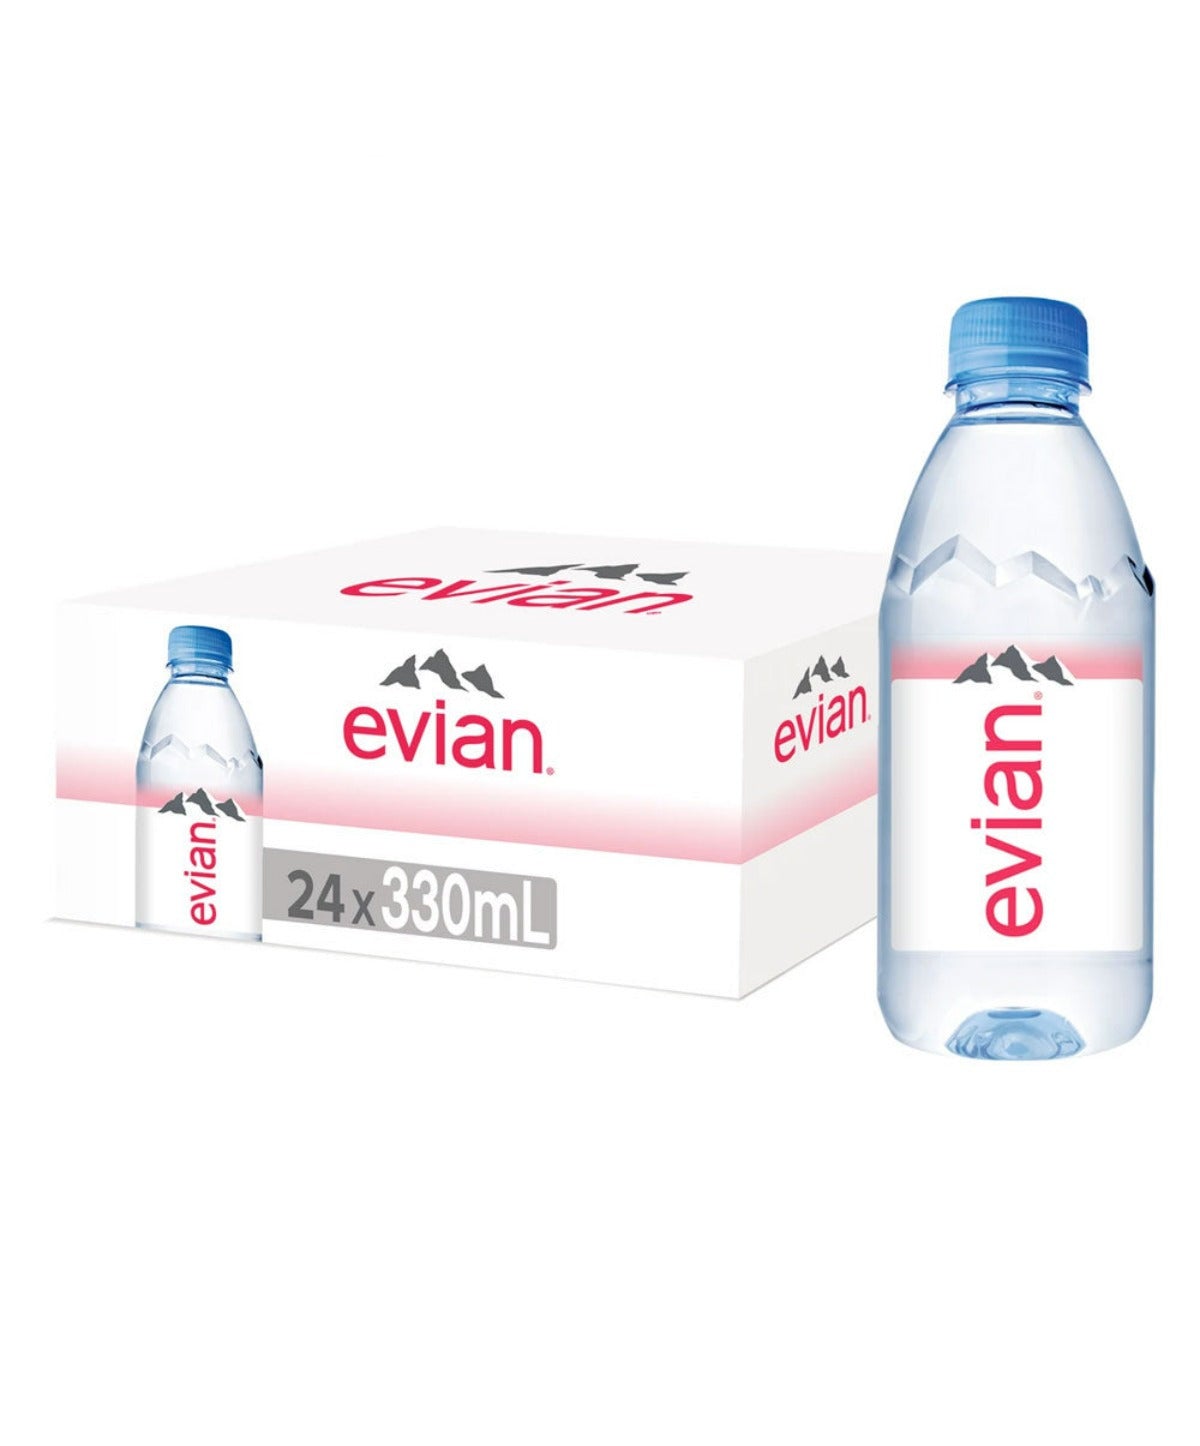 Evian Natural Mineral Water, 24 x 330ml Bottles